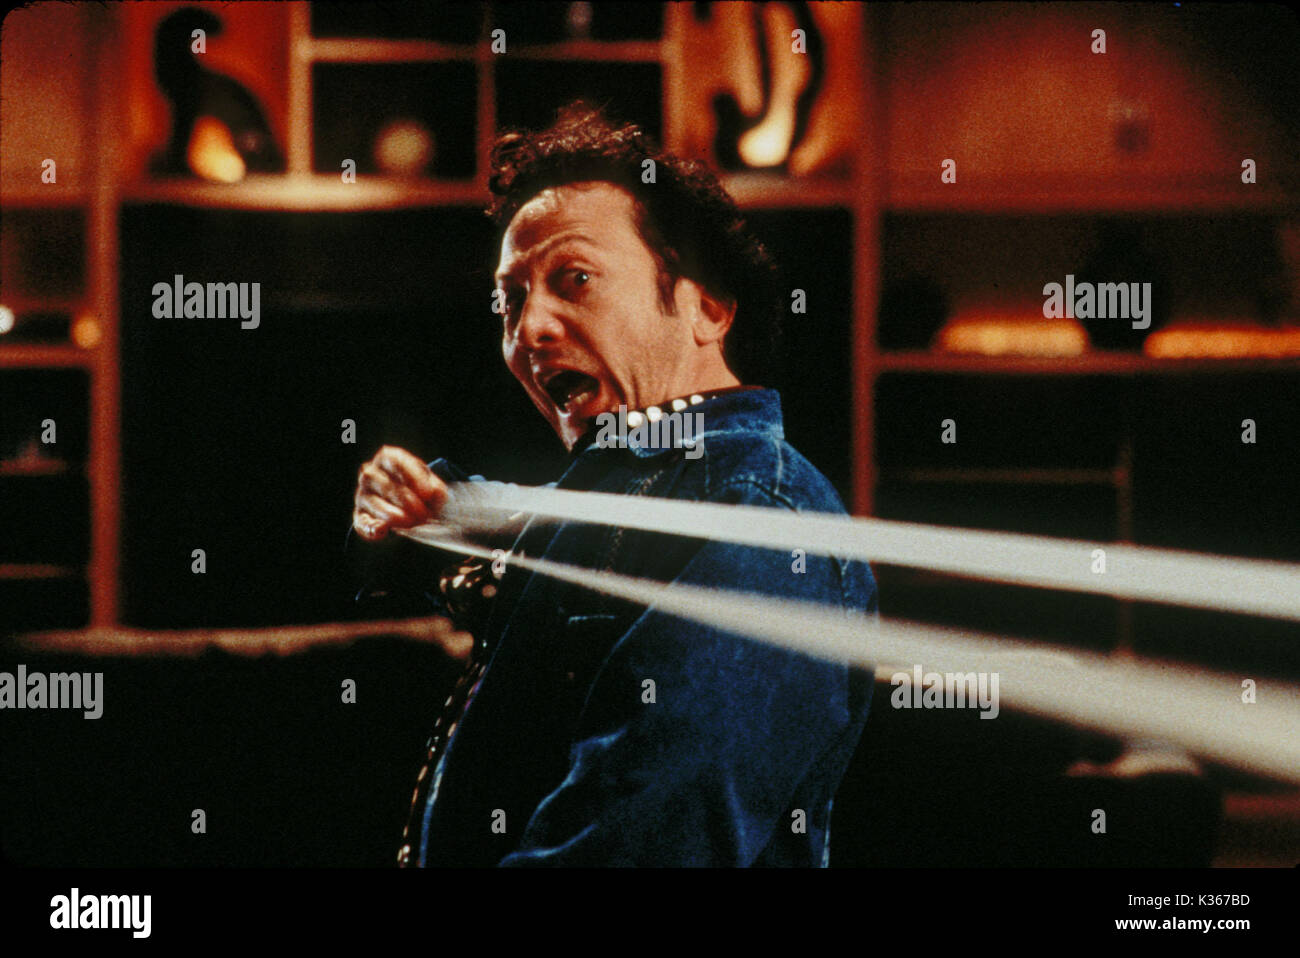 DEUCE BIGALOW: MASCHIO GIOLO ROB SCHNEIDER, FILM DI TOUCHSTONE PICTURES DEUCE BIGALOW: MASCHIO GIGOLO ROB SCHNEIDER data: 1999 Foto Stock